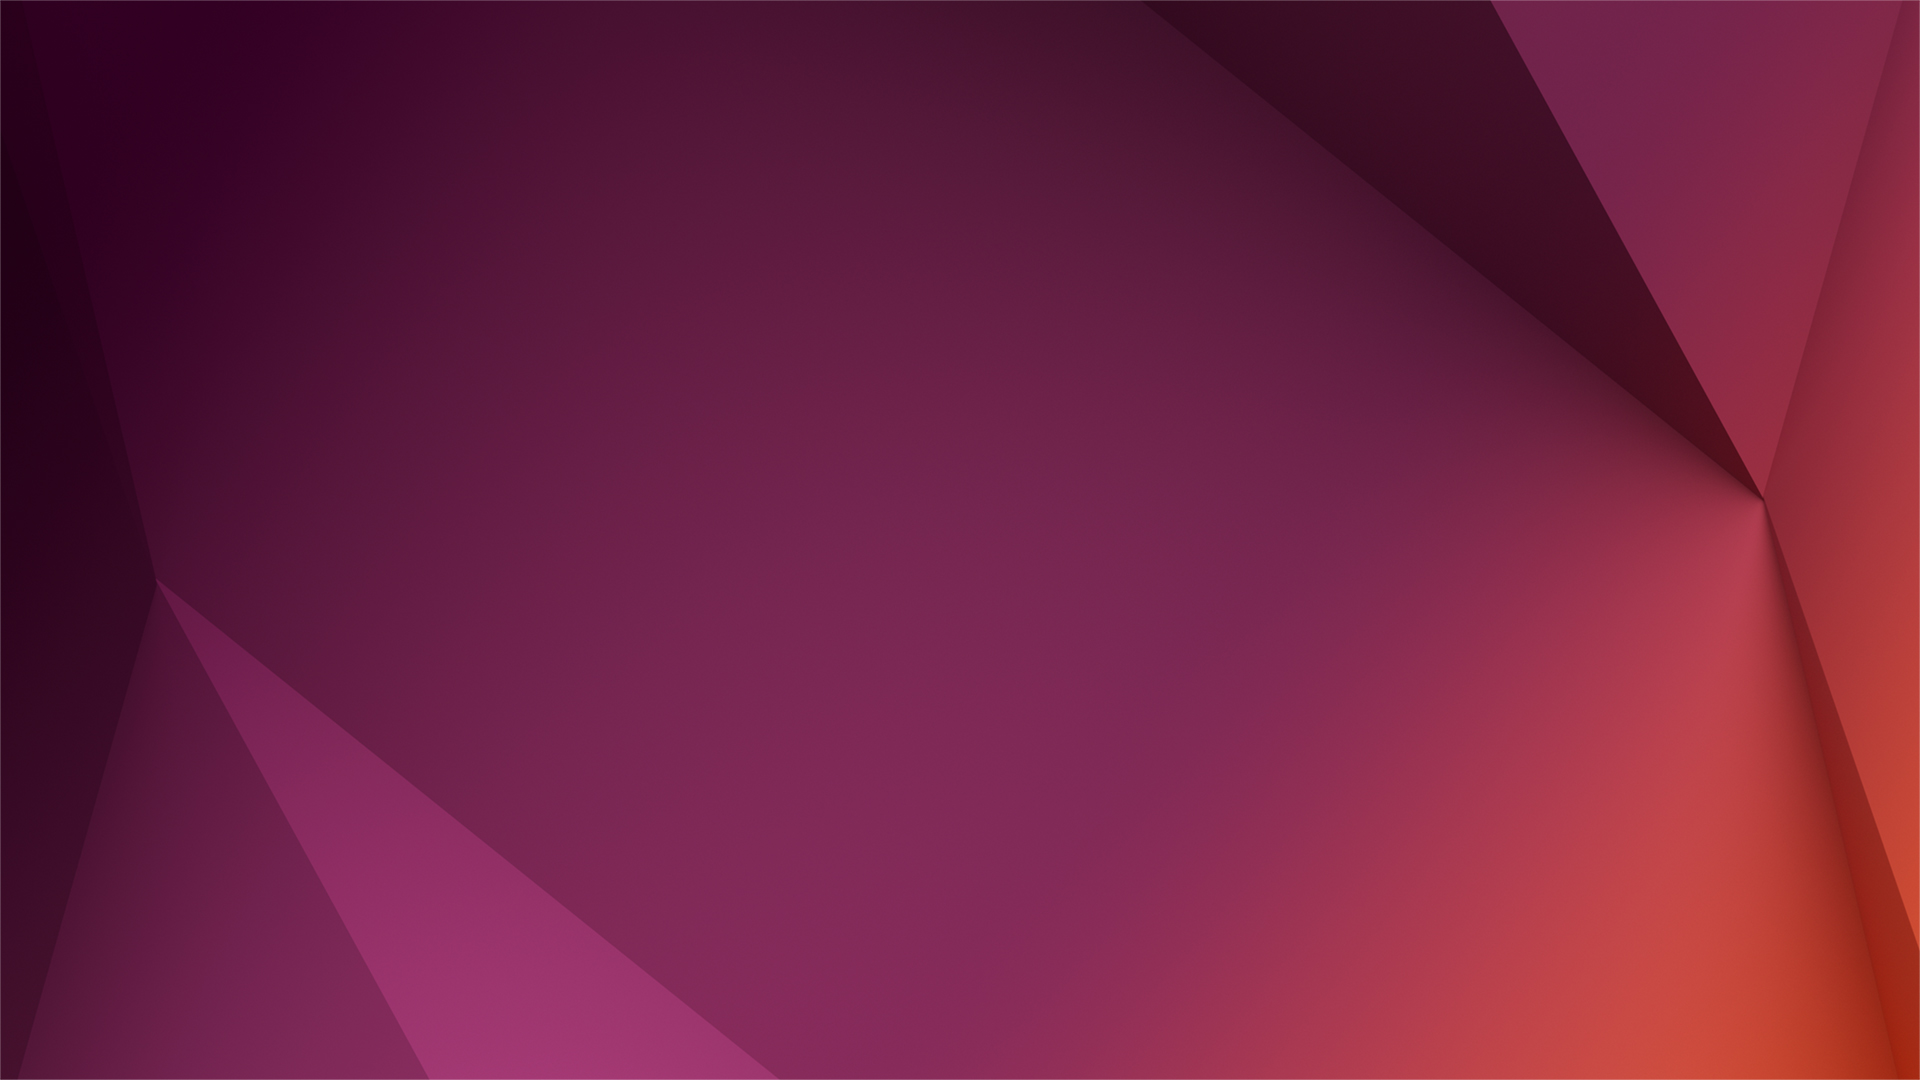 Ubuntu Ubuntu Desktop Logo Operating System Abstract Colorful 1920x1080